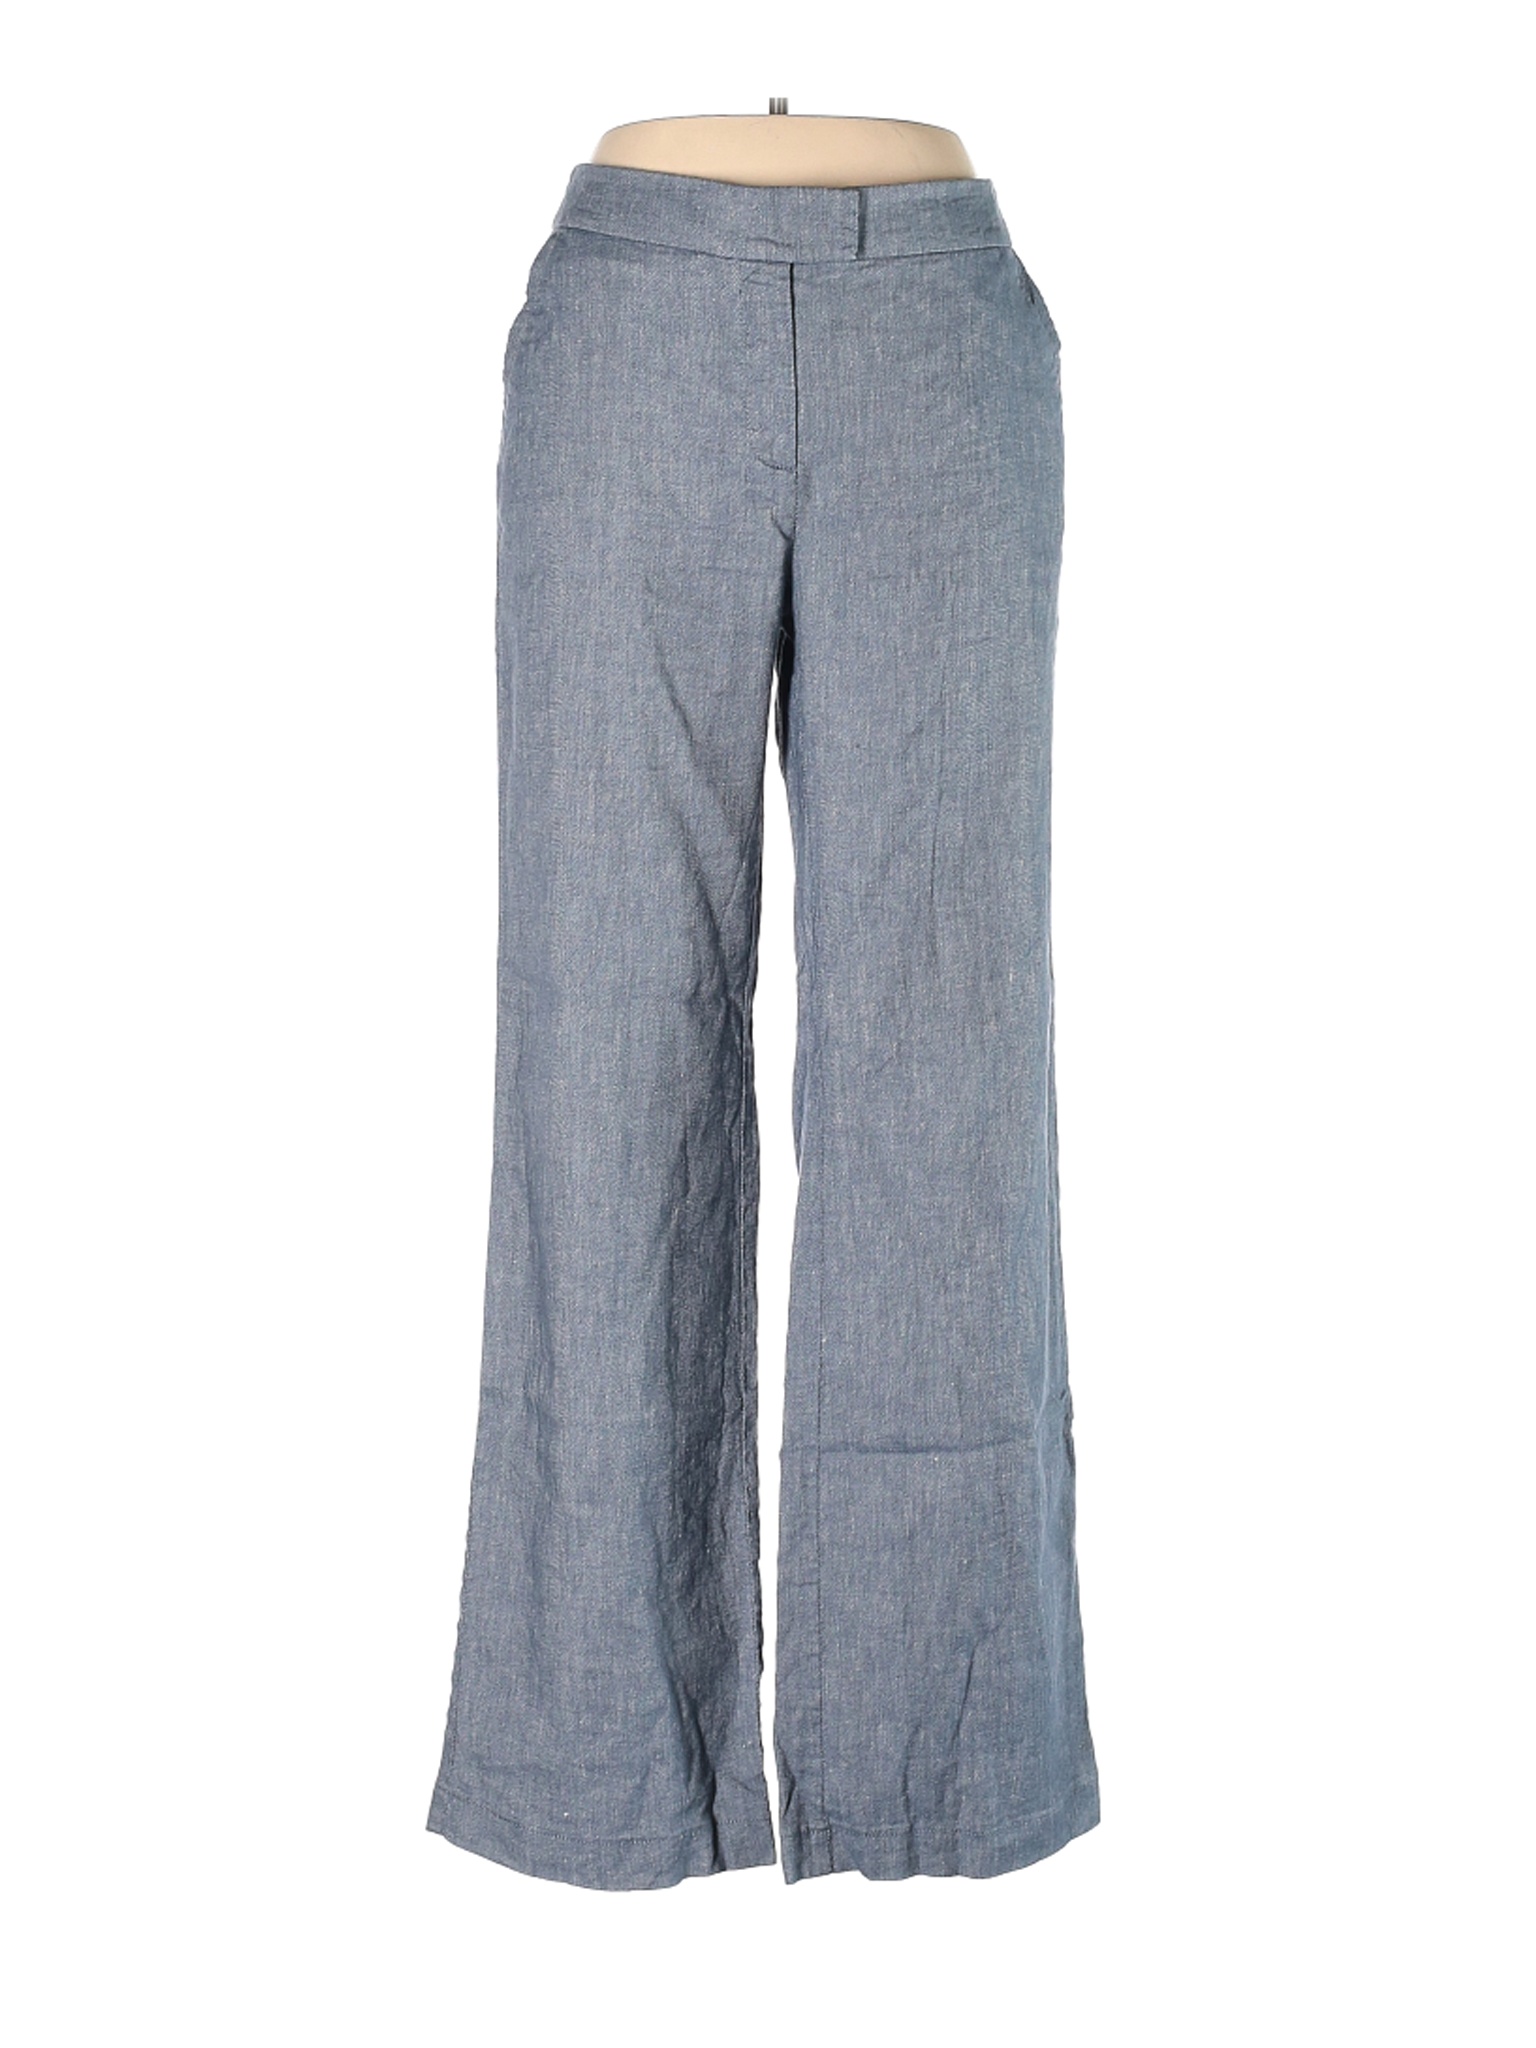 Boden Women Gray Linen Pants 10 | eBay